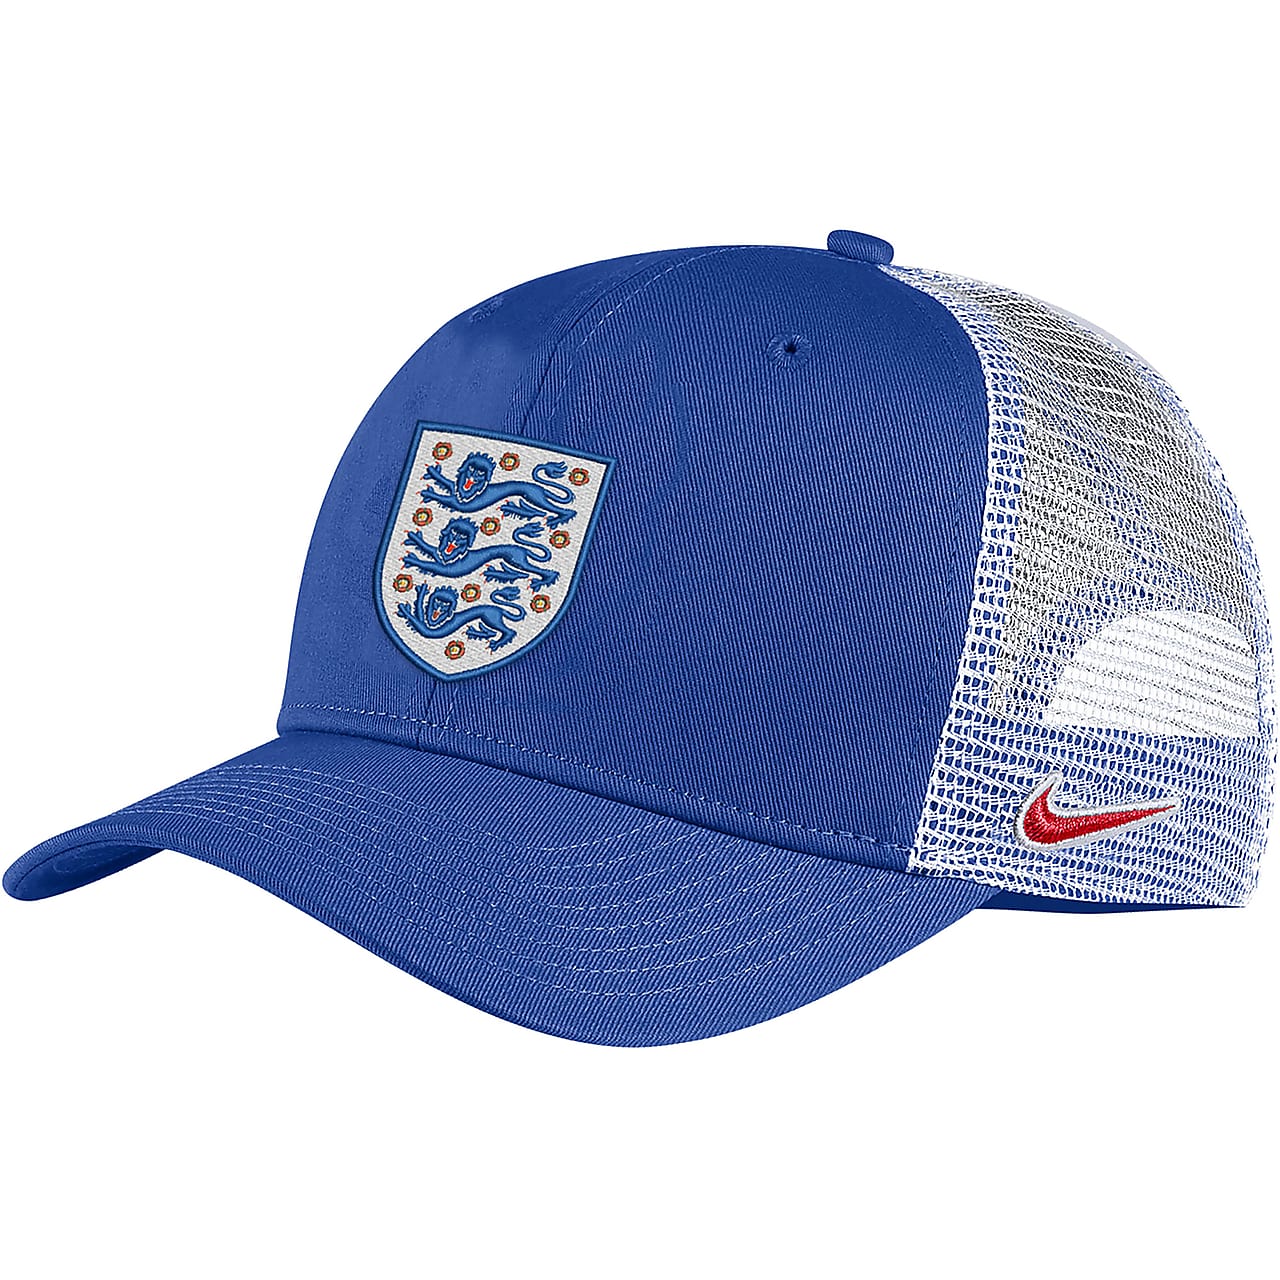 England Classic 99 Men's Nike Trucker Hat.